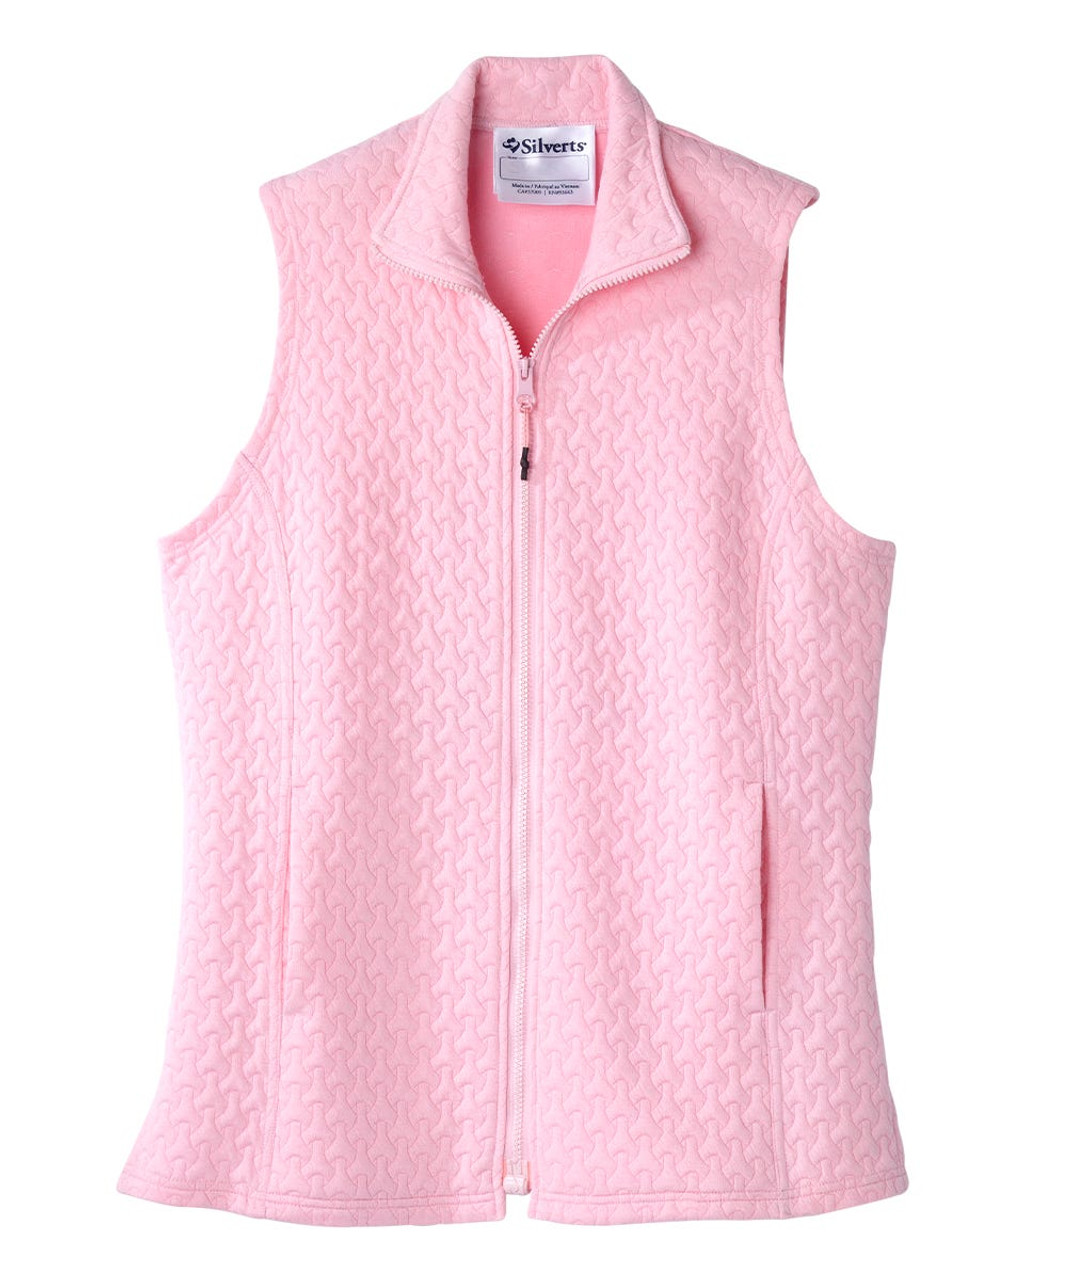 Silverts SV165 Senior Women's Adaptive Mag Zip Track Suit Vest Pink, Size=XS, SV165-SV14-XS